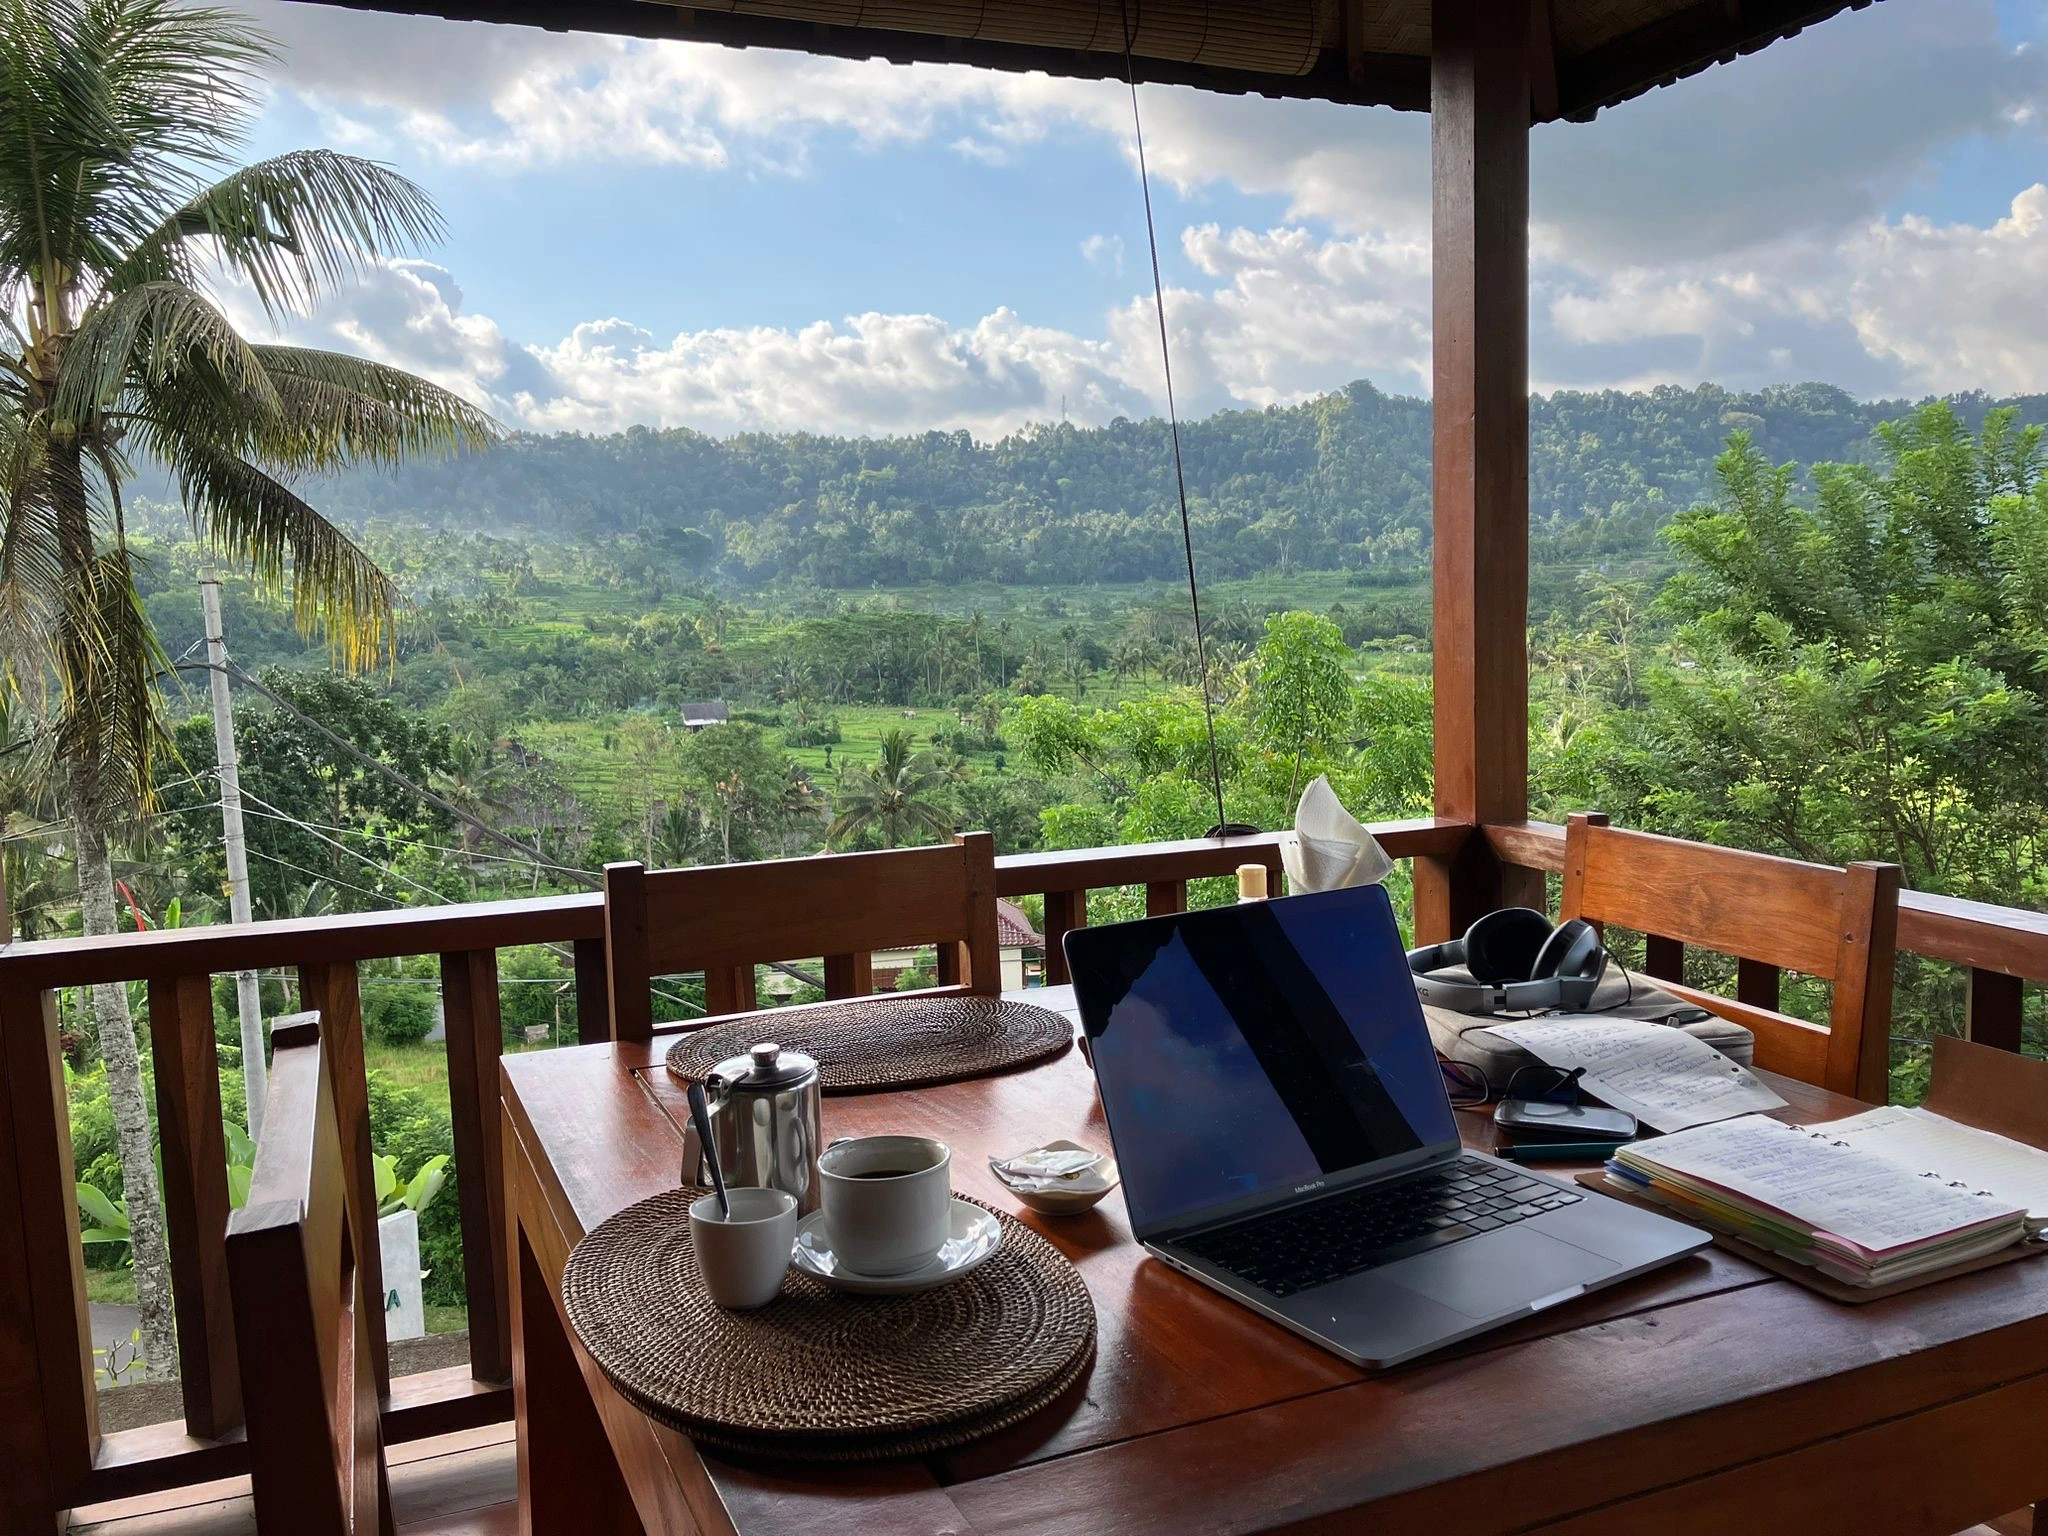 Erwin's view in Bali